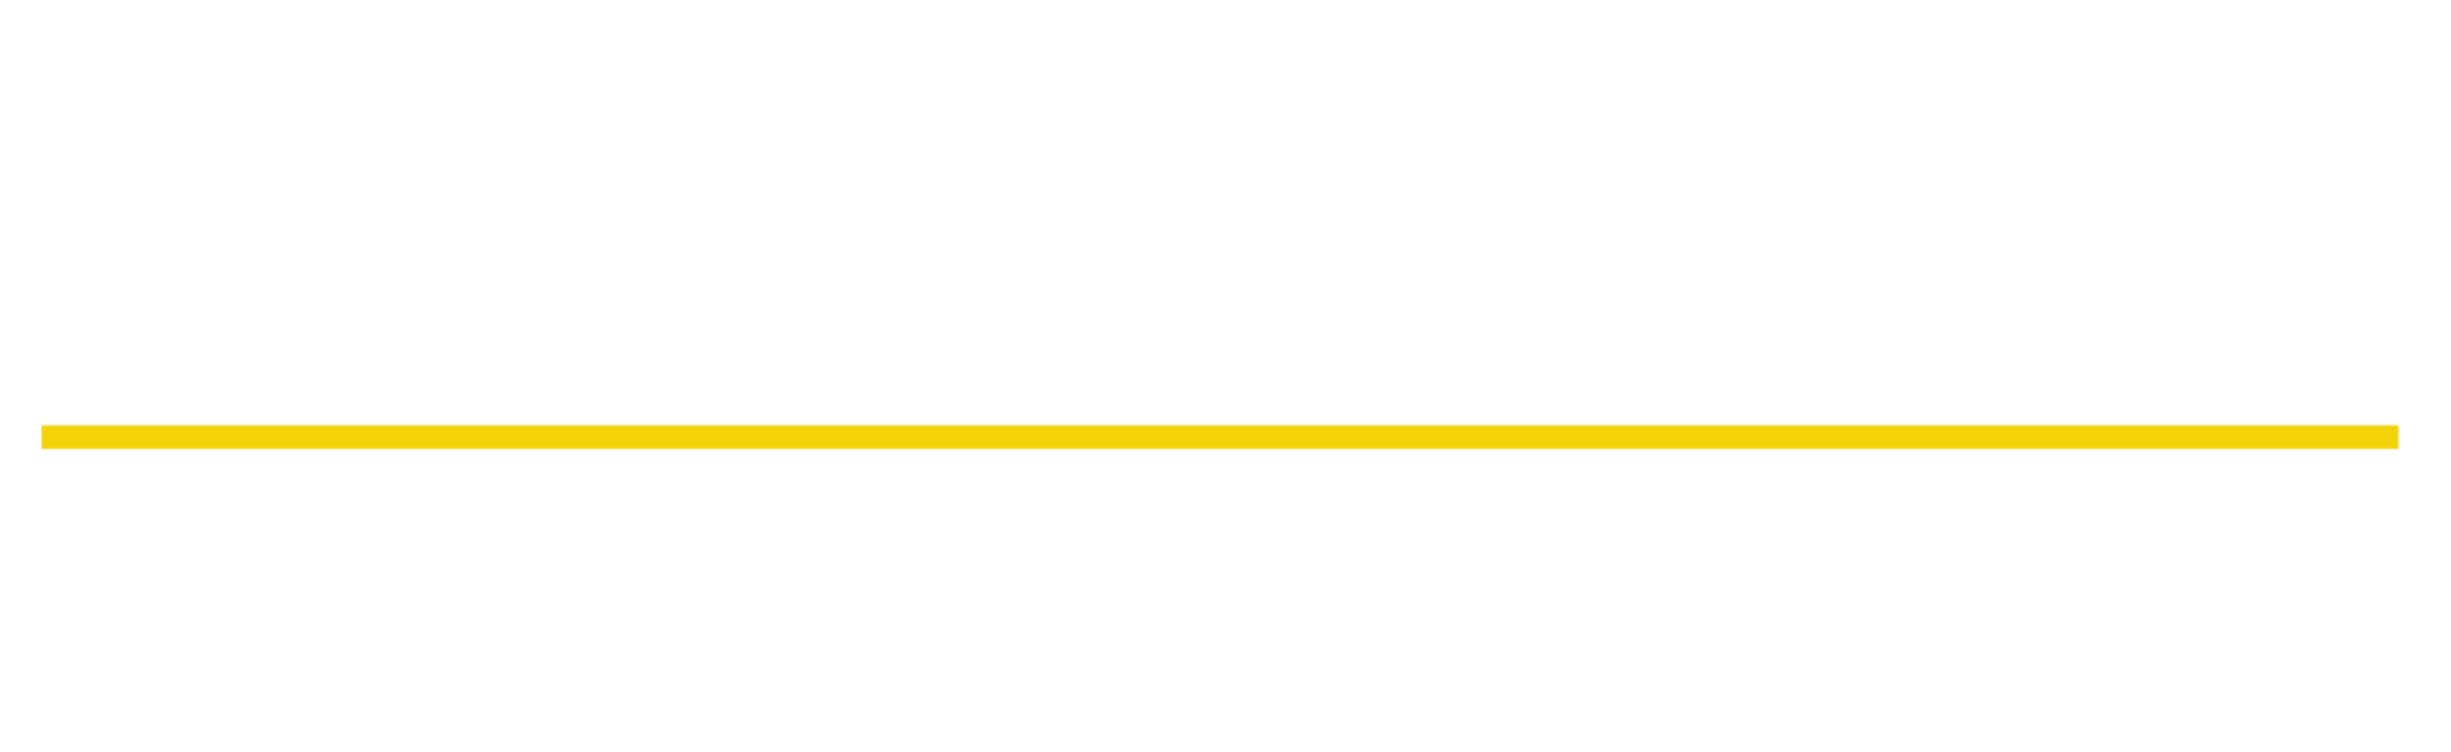 CC Sales Property Division